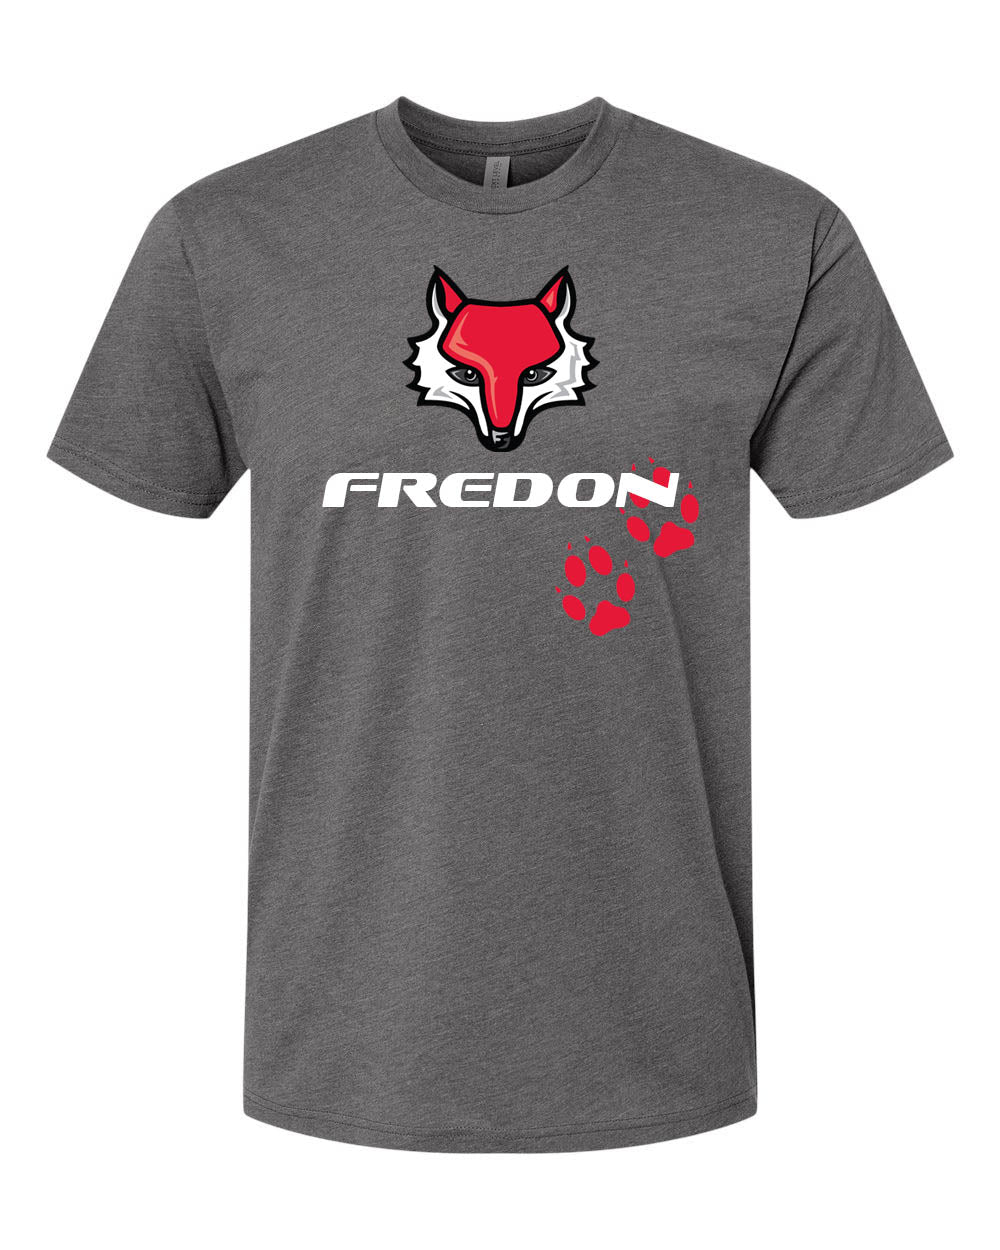 Fredon Design 5 T-Shirt